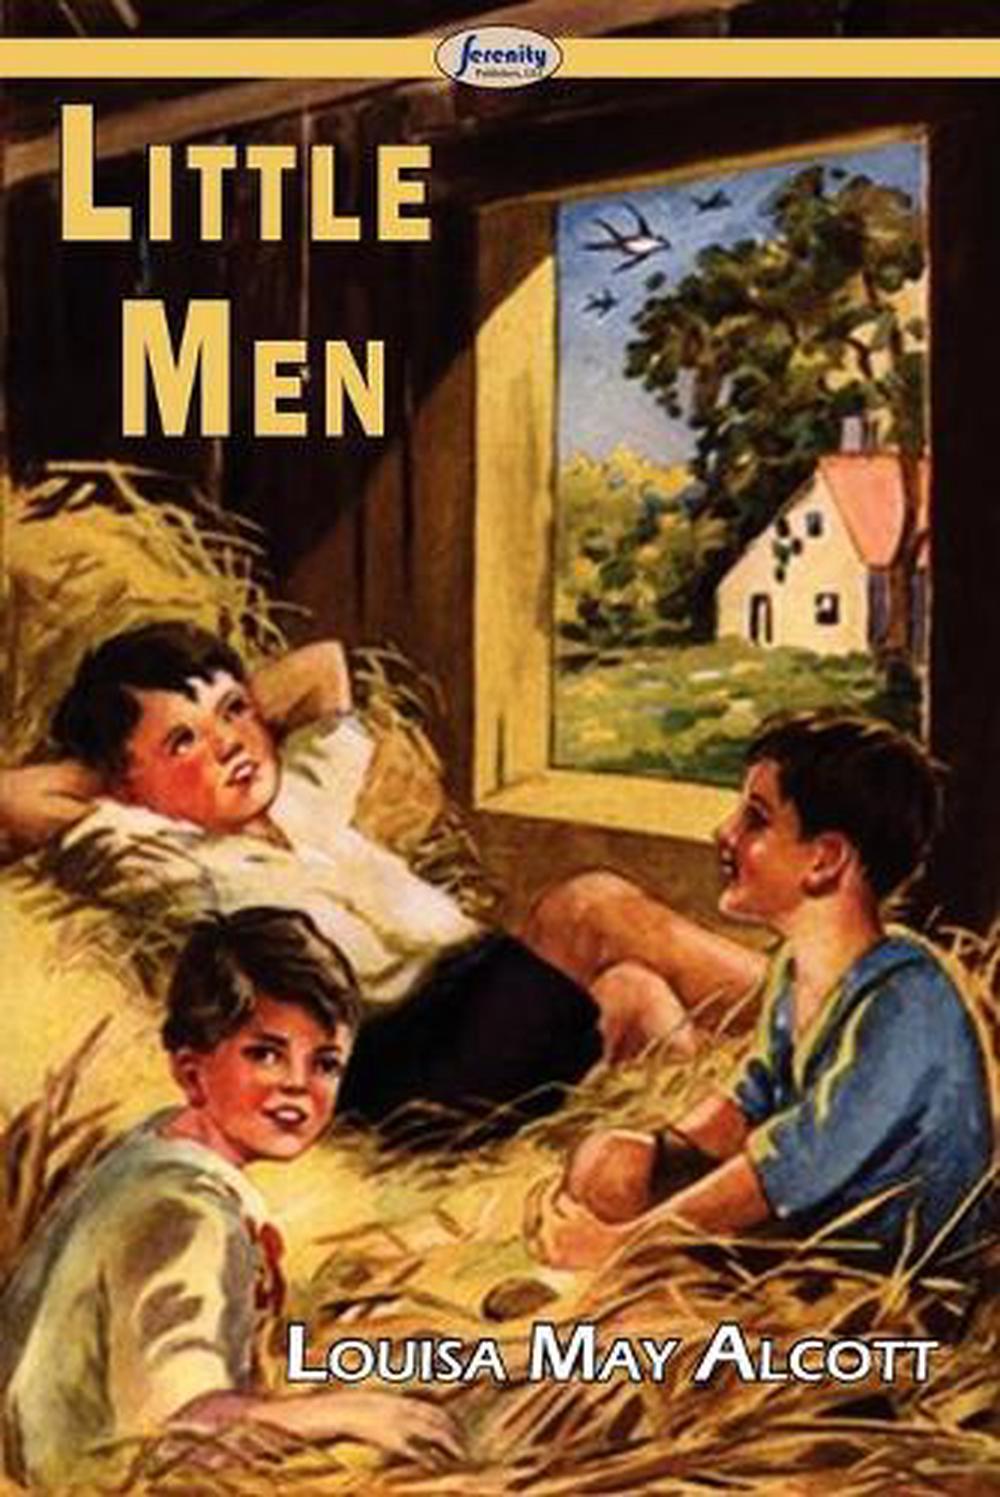 Little Men by Louisa May Alcott (English) Paperback Book Free Shipping! 9781604506051 | eBay